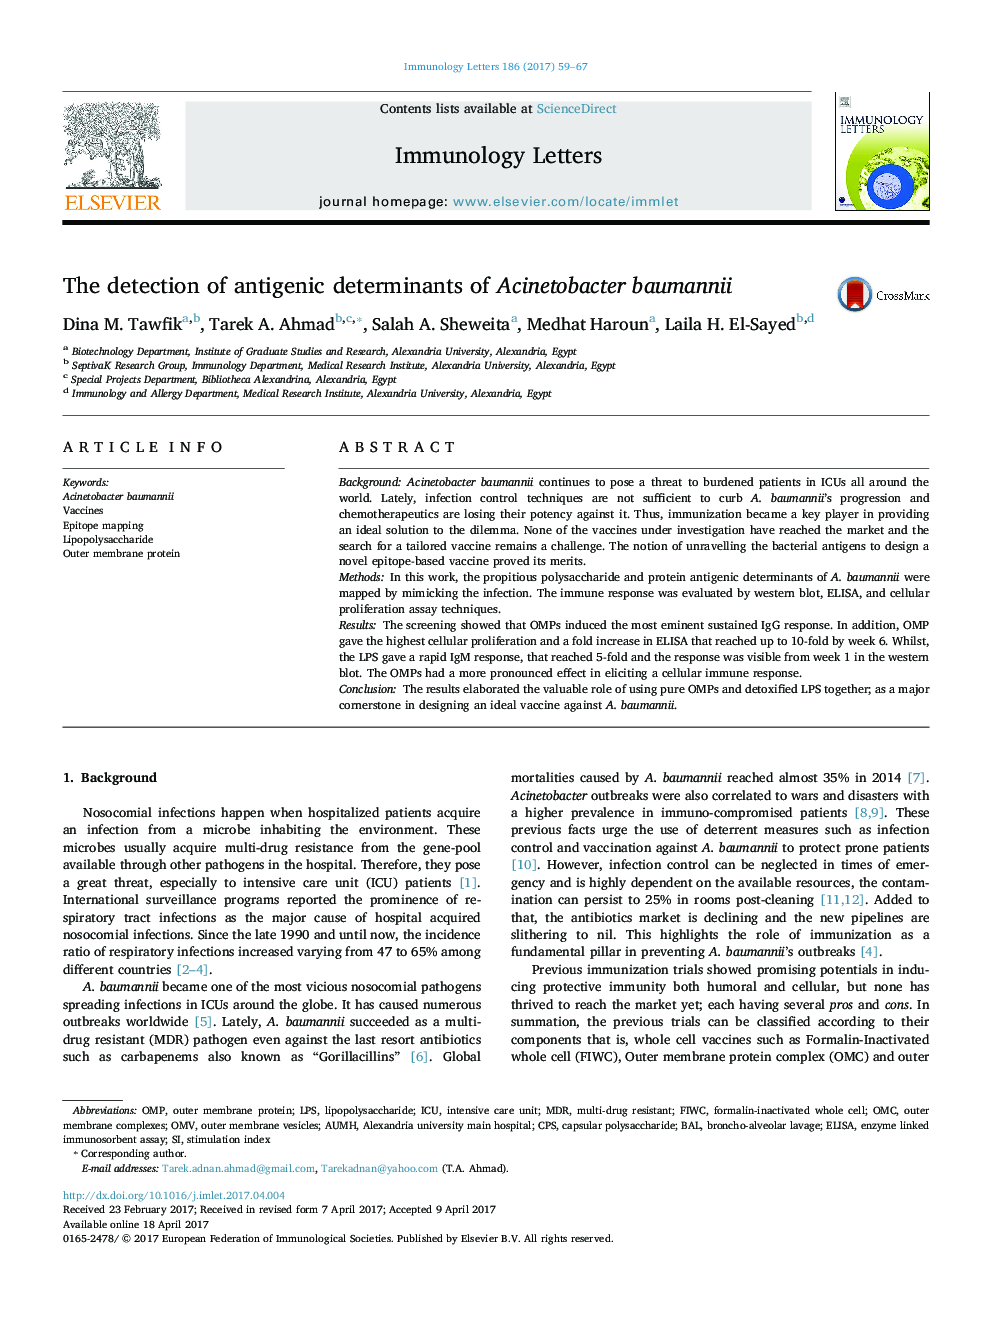 The detection of antigenic determinants of Acinetobacter baumannii